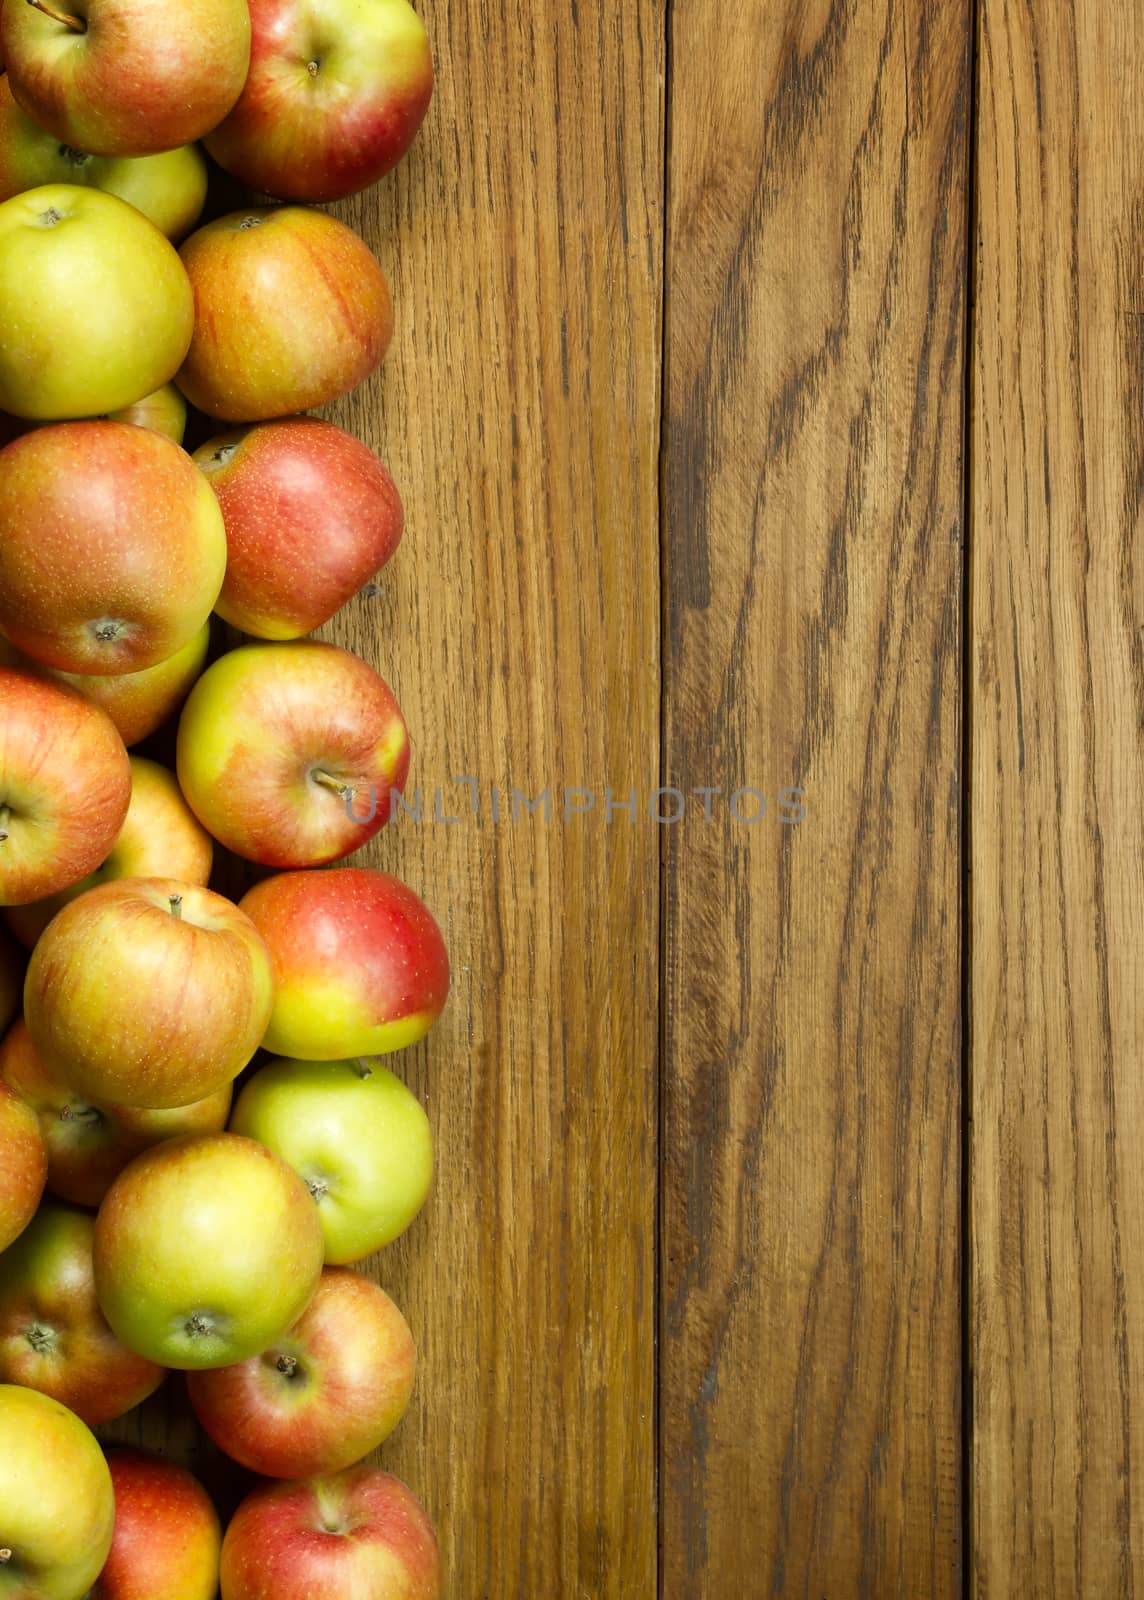 Apples by Valengilda